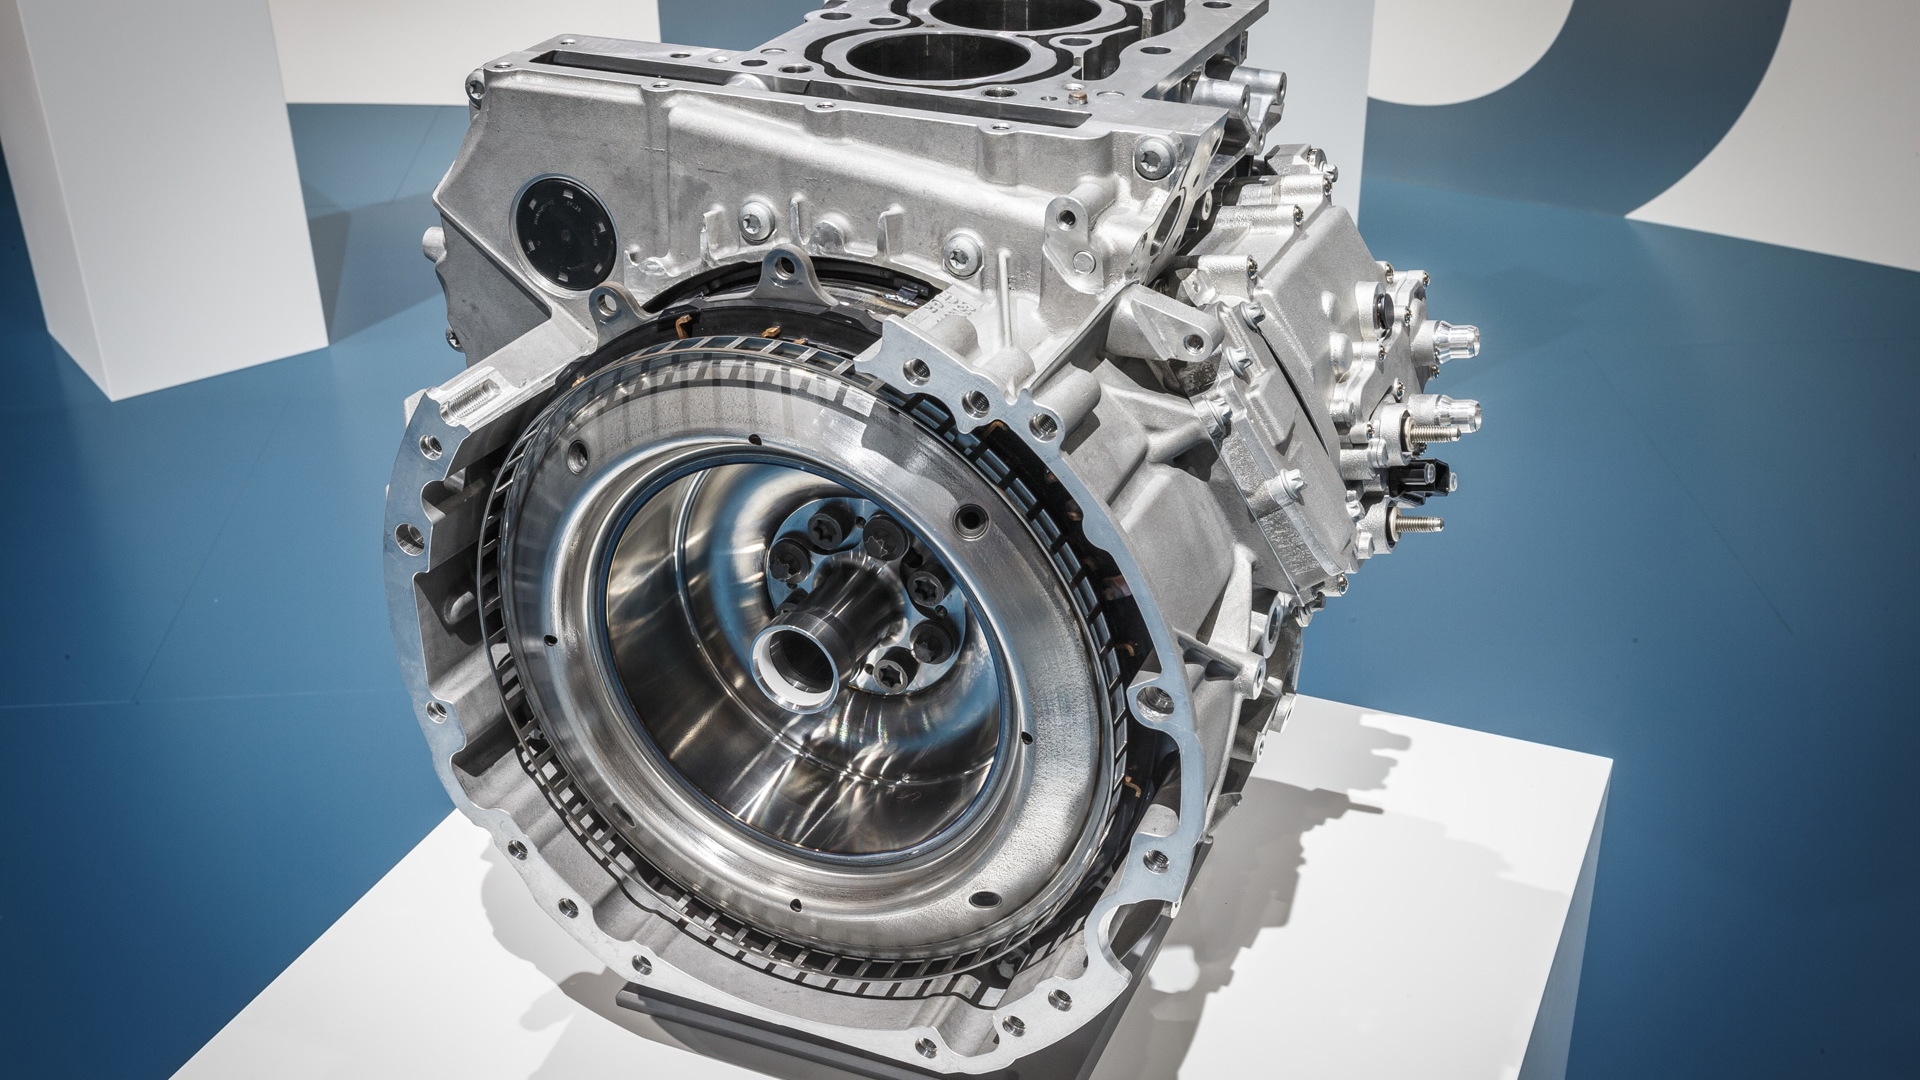 Mercedes-Benz integrated starter generator (ISG)